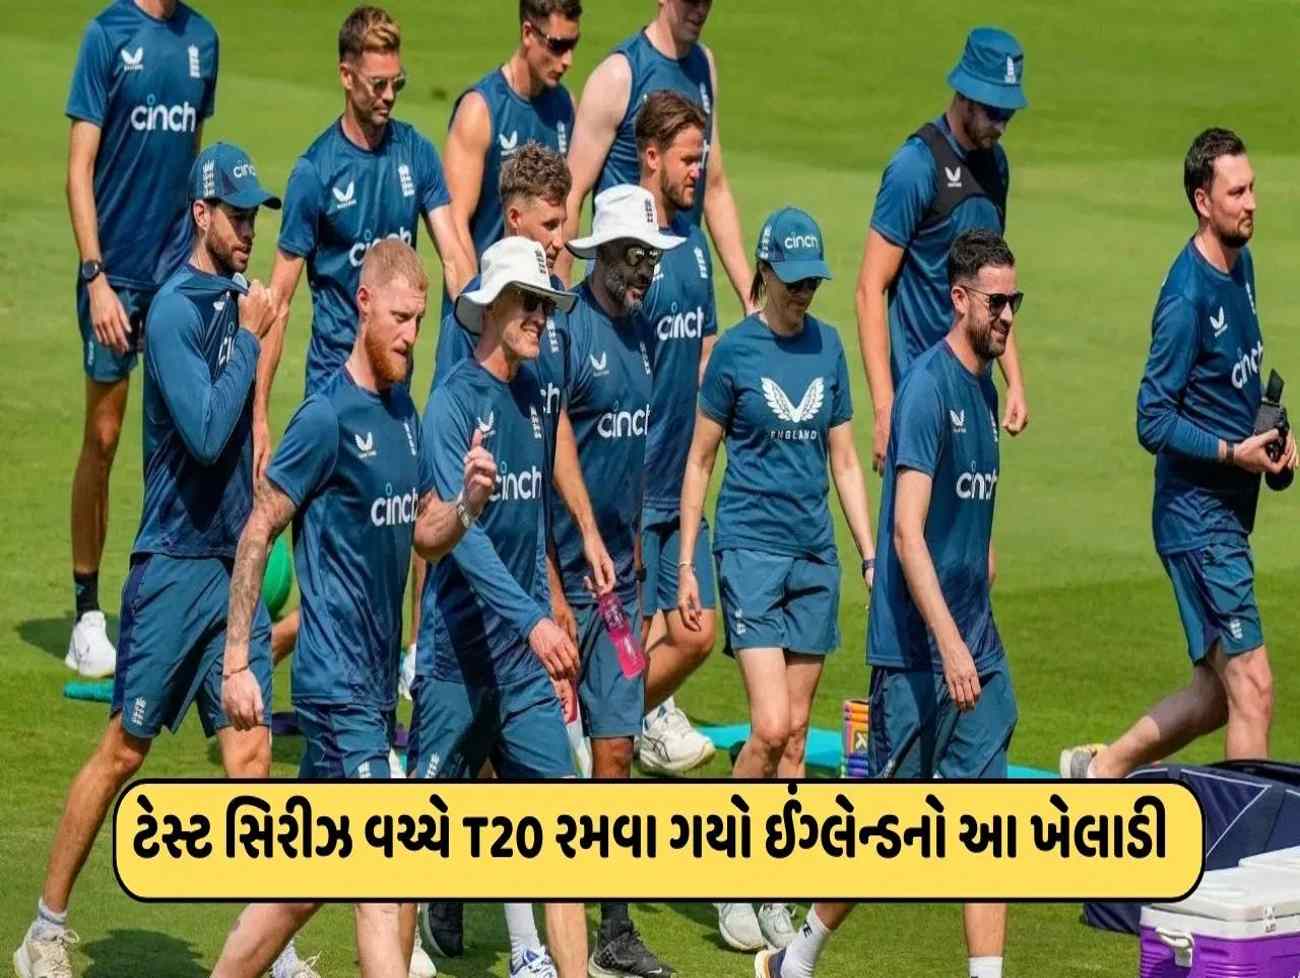 IND vs ENG ટેસ્ટ સિરીઝ વચ્ચે T20 લીગ રમવા ગયો આ ખેલાડી, ઈંગ્લેન્ડનો ચોંકાવનારો નિર્ણય